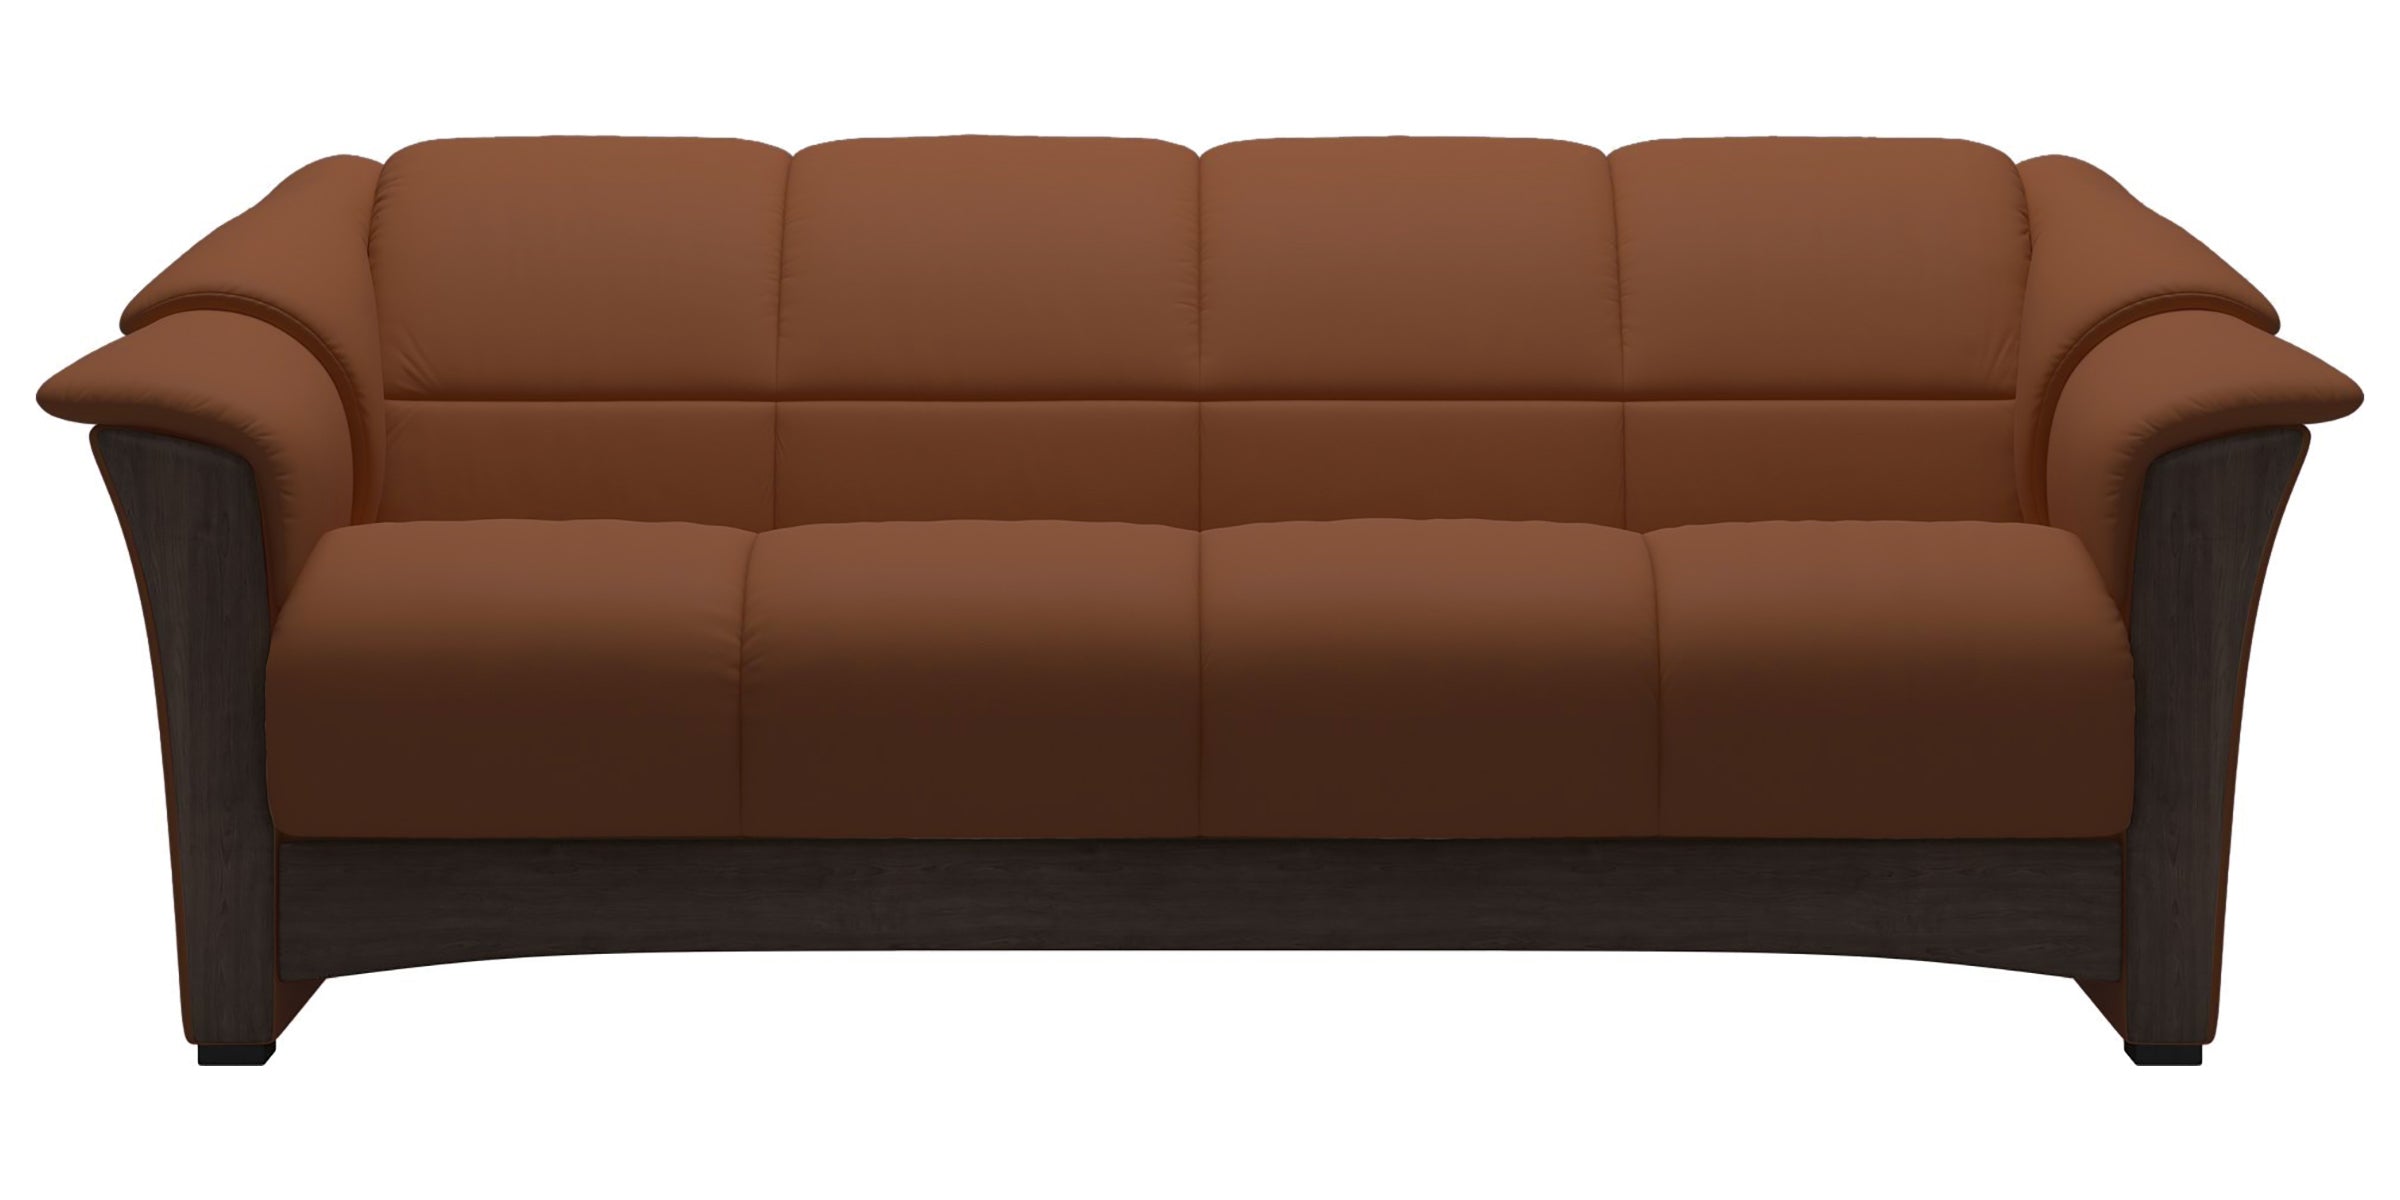 Paloma Leather New Cognac and Wenge Base | Stressless Oslo Sofa | Valley Ridge Furniture